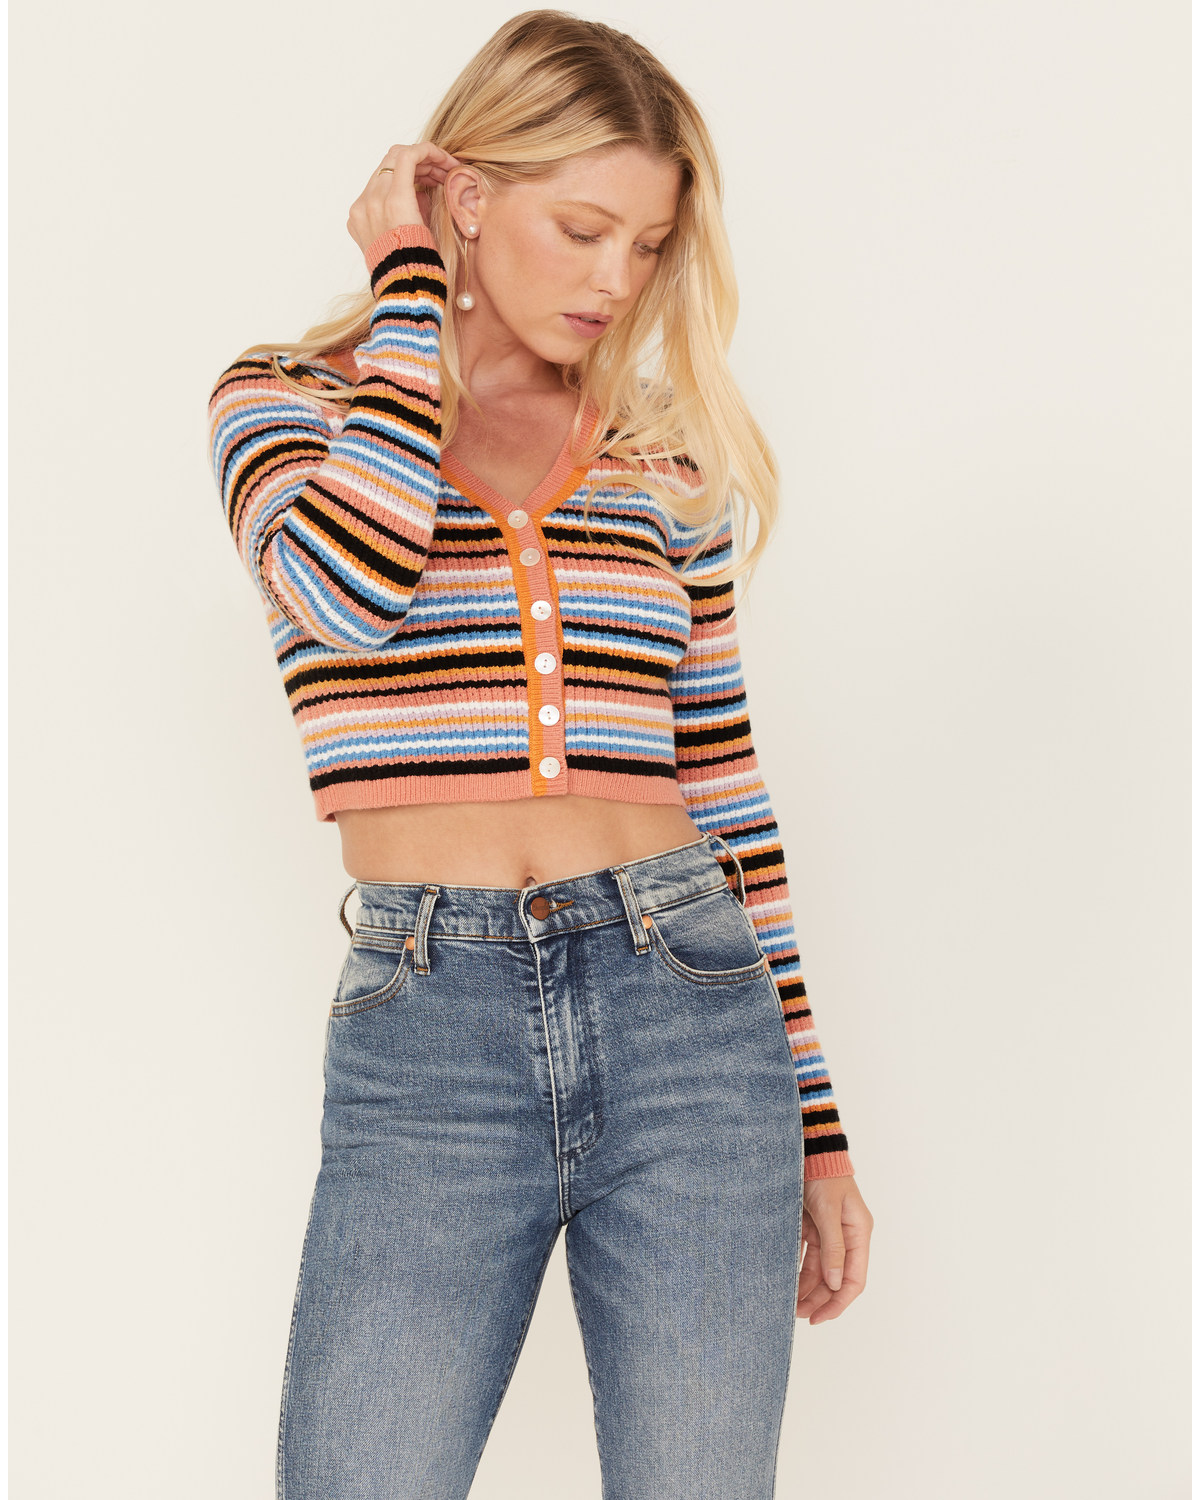 Beyond The Radar Women's Stripe Knit Cropped Cardigan Sweater